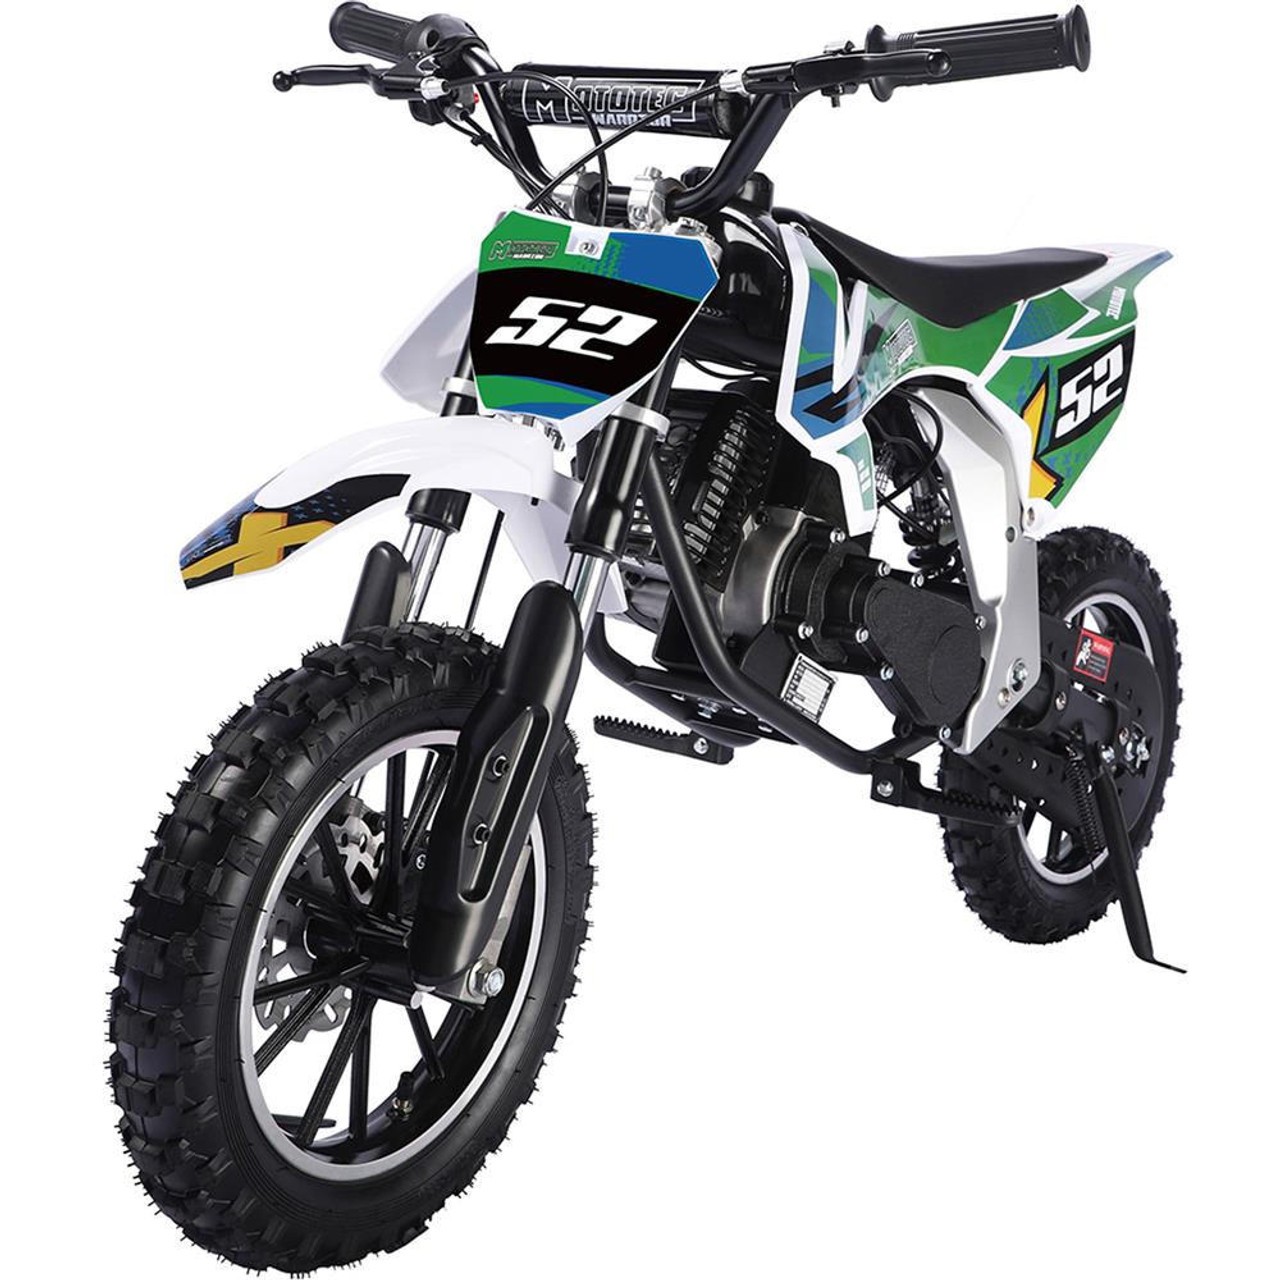  Mototec Warrior 52cc 2-stroke Kids Gas Dirt Bike Green 